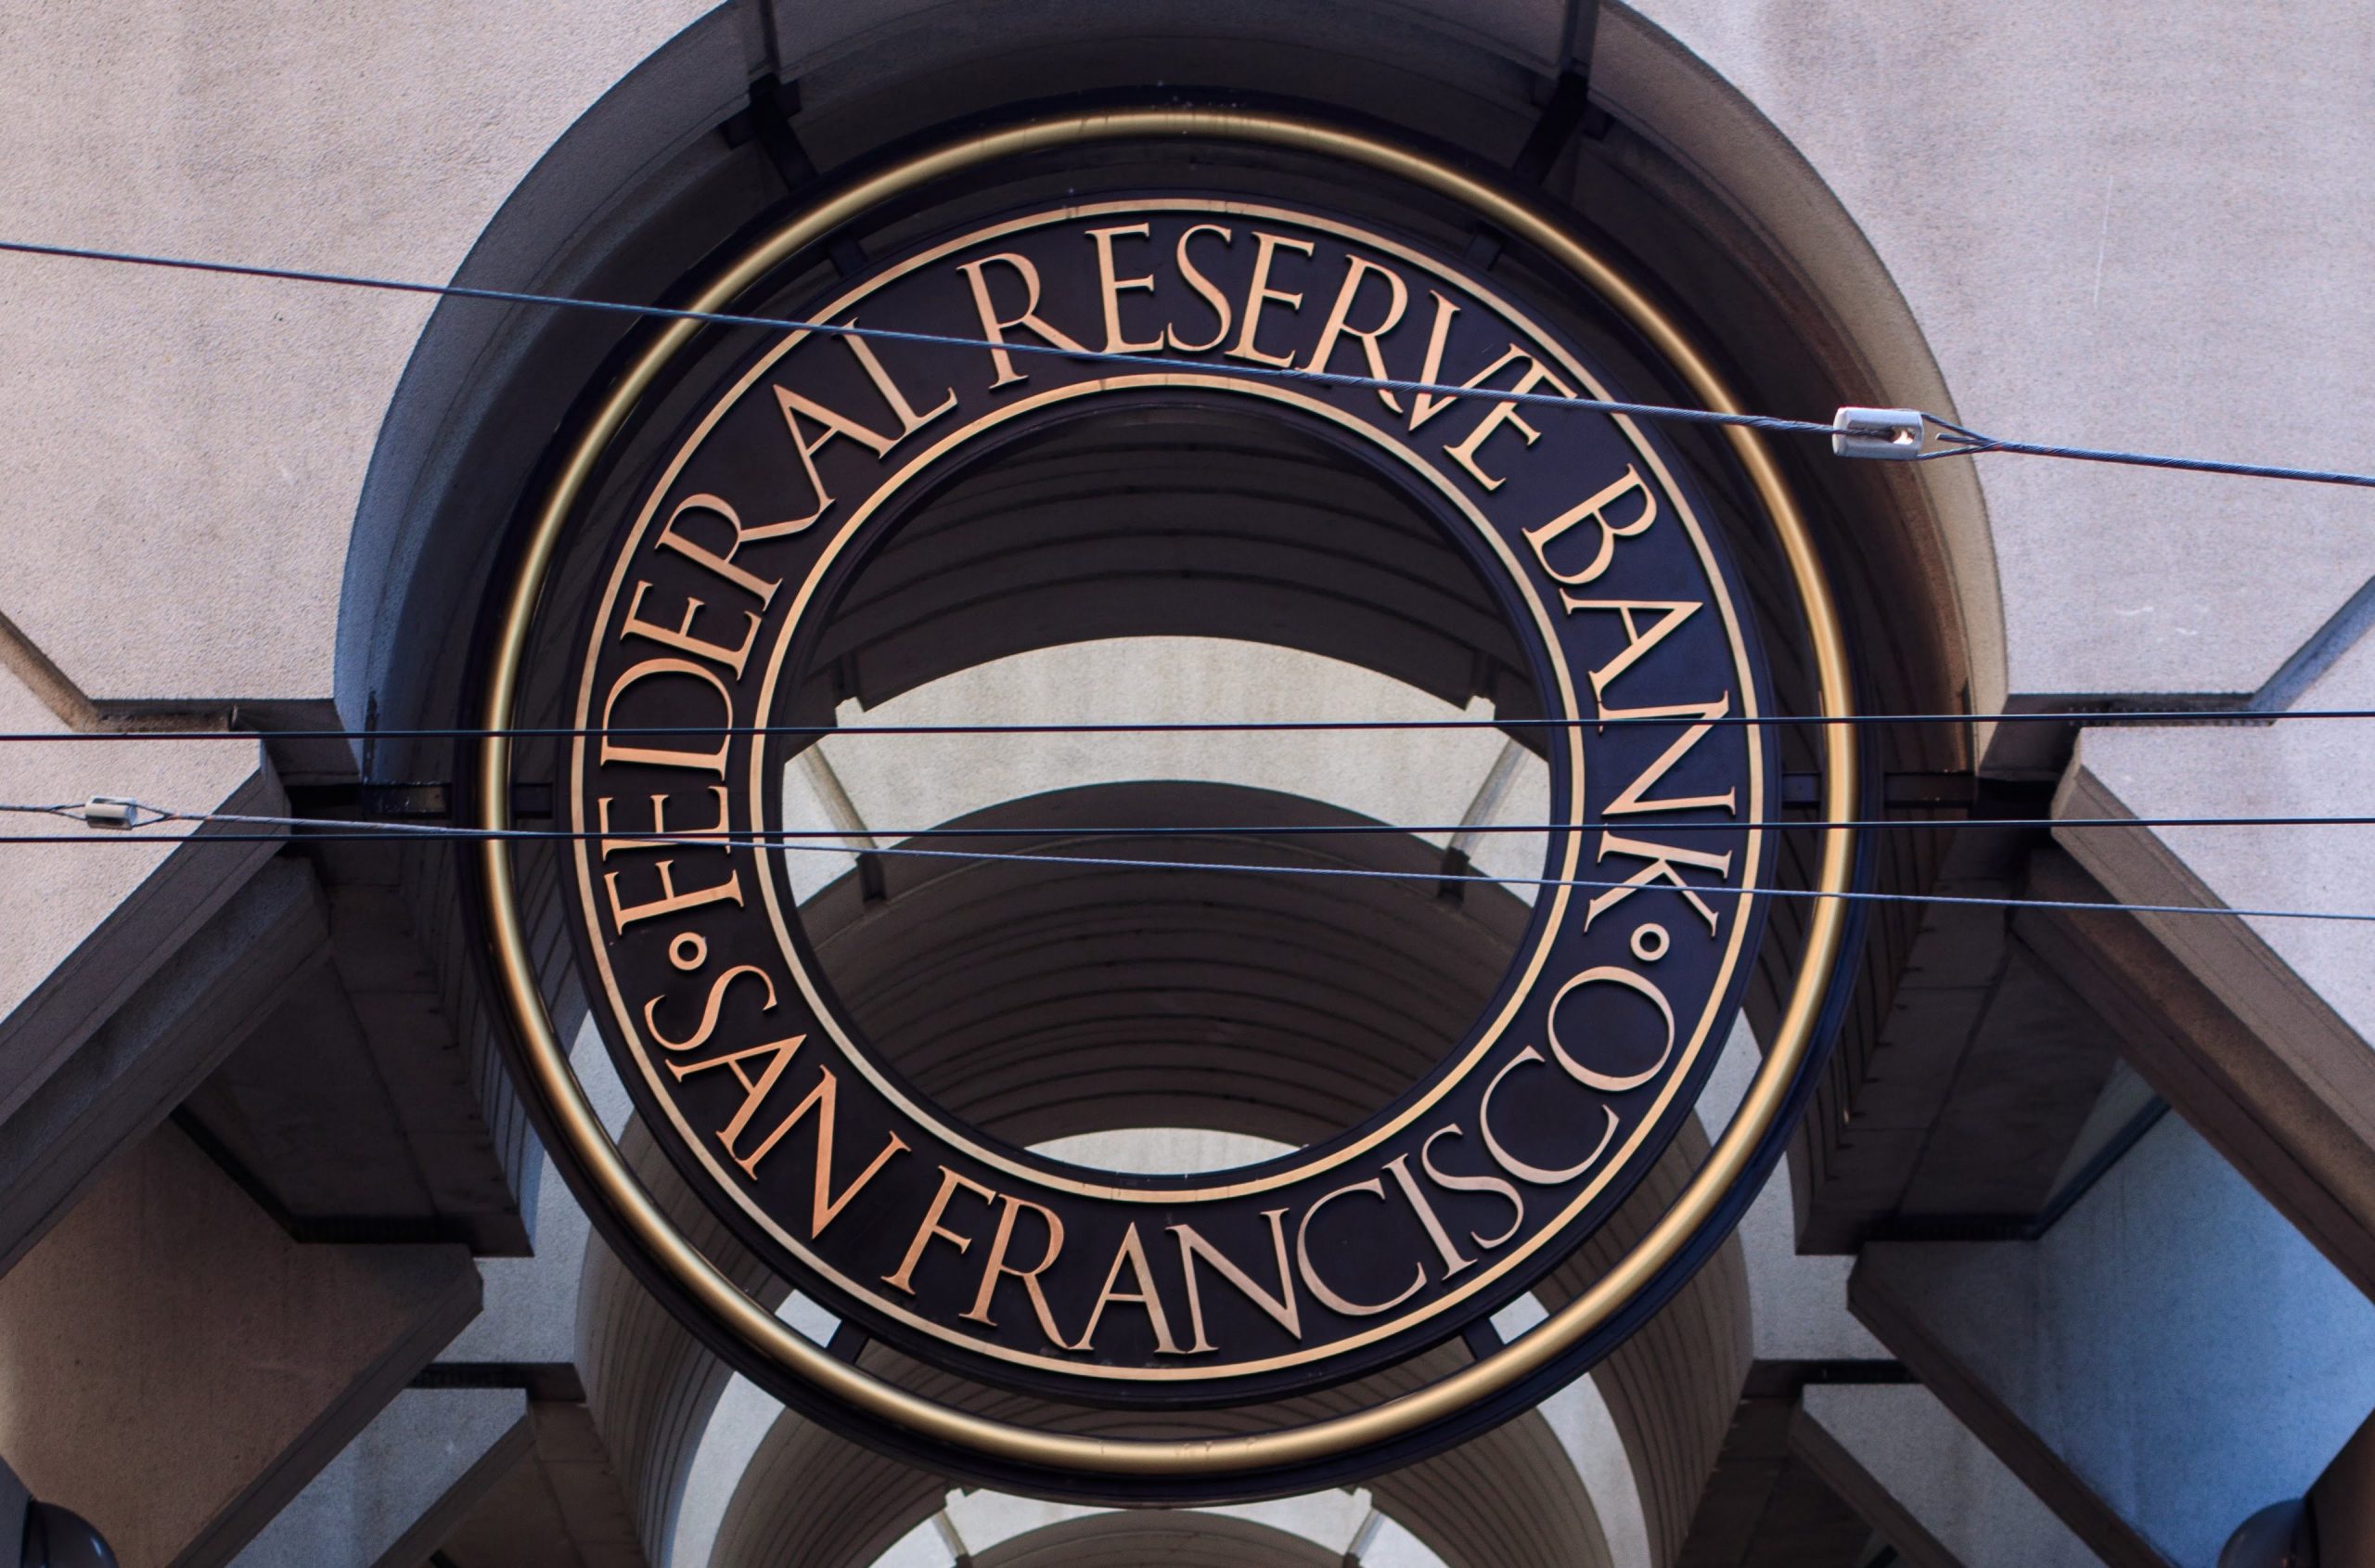 Federal Reserve bank of San Francisco